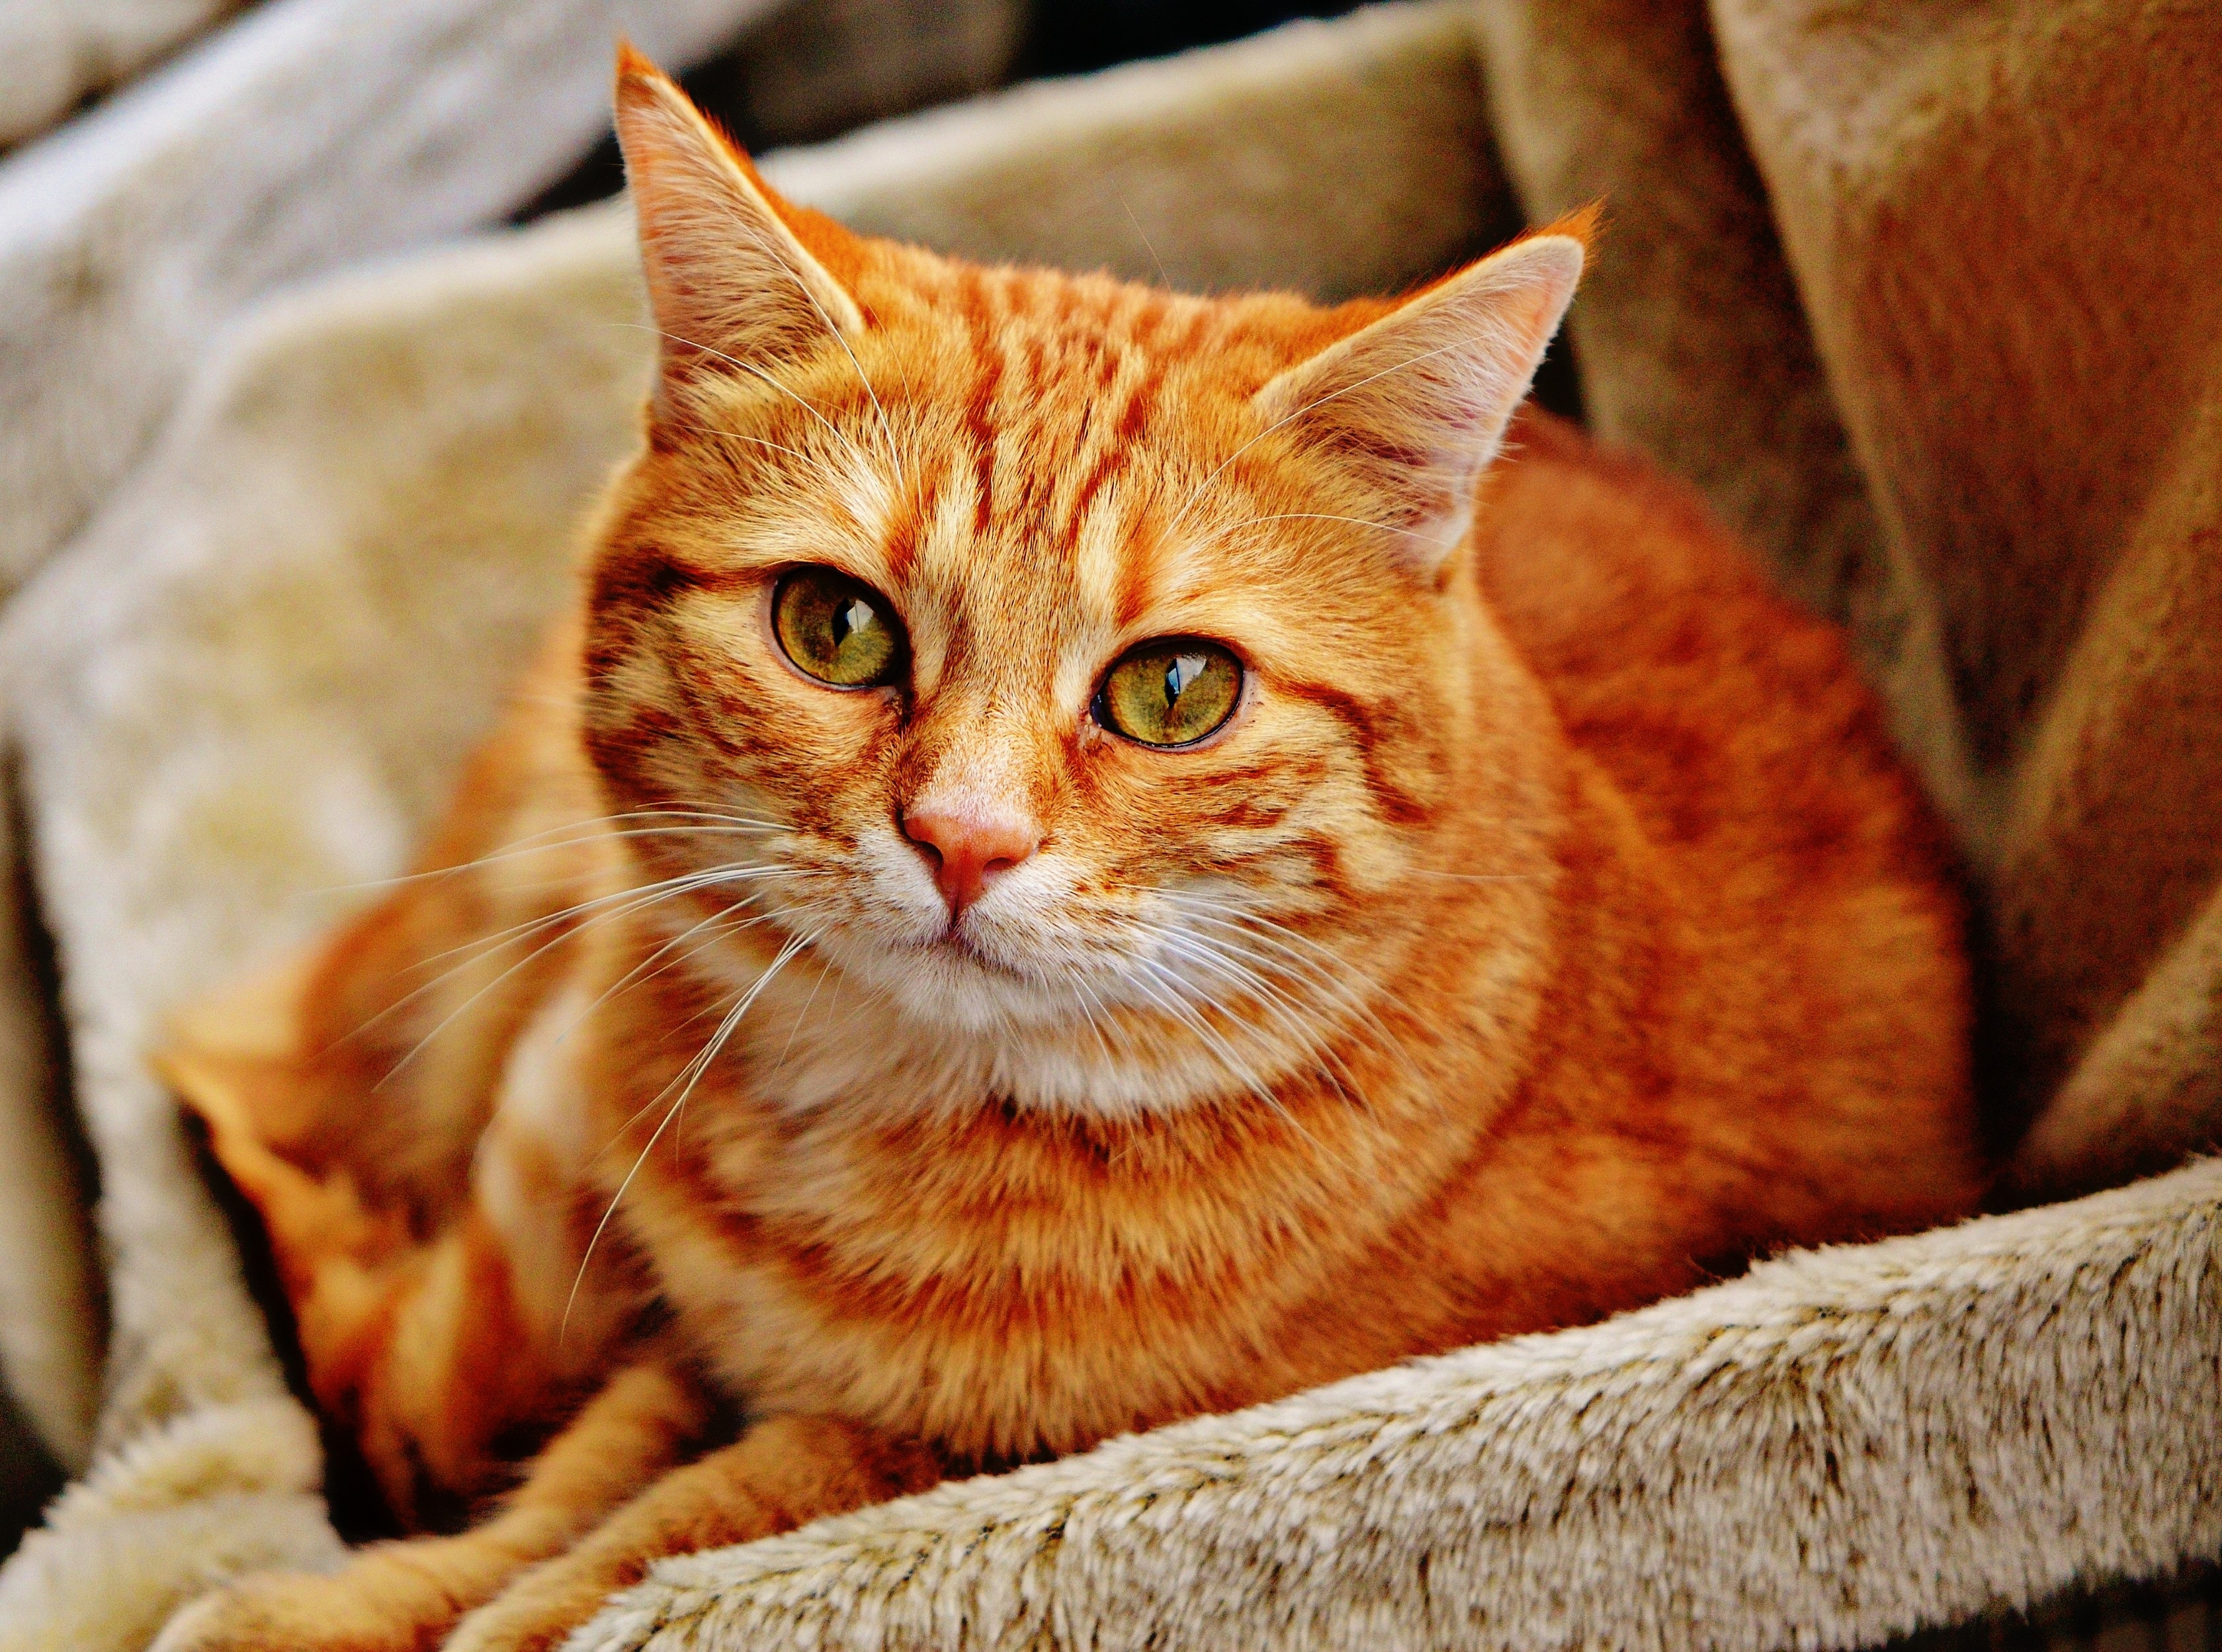 Orange Tabby Cat Laying on Brown Sofa · Free Stock Photo